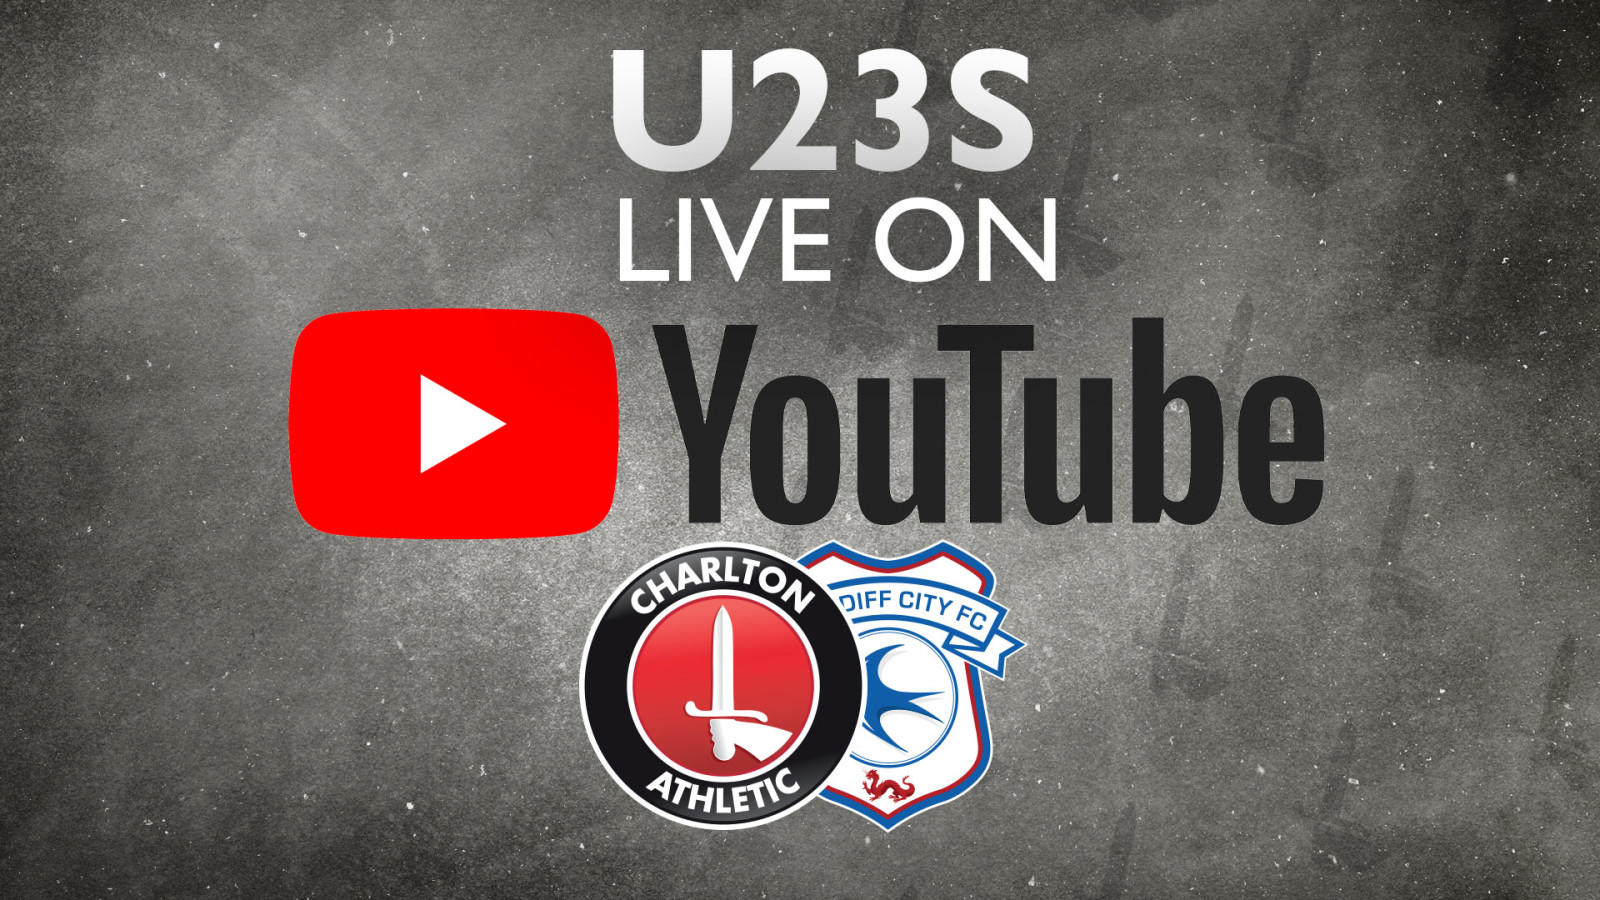 Watch U23s v Cardiff City live on YouTube Charlton Athletic Football Club